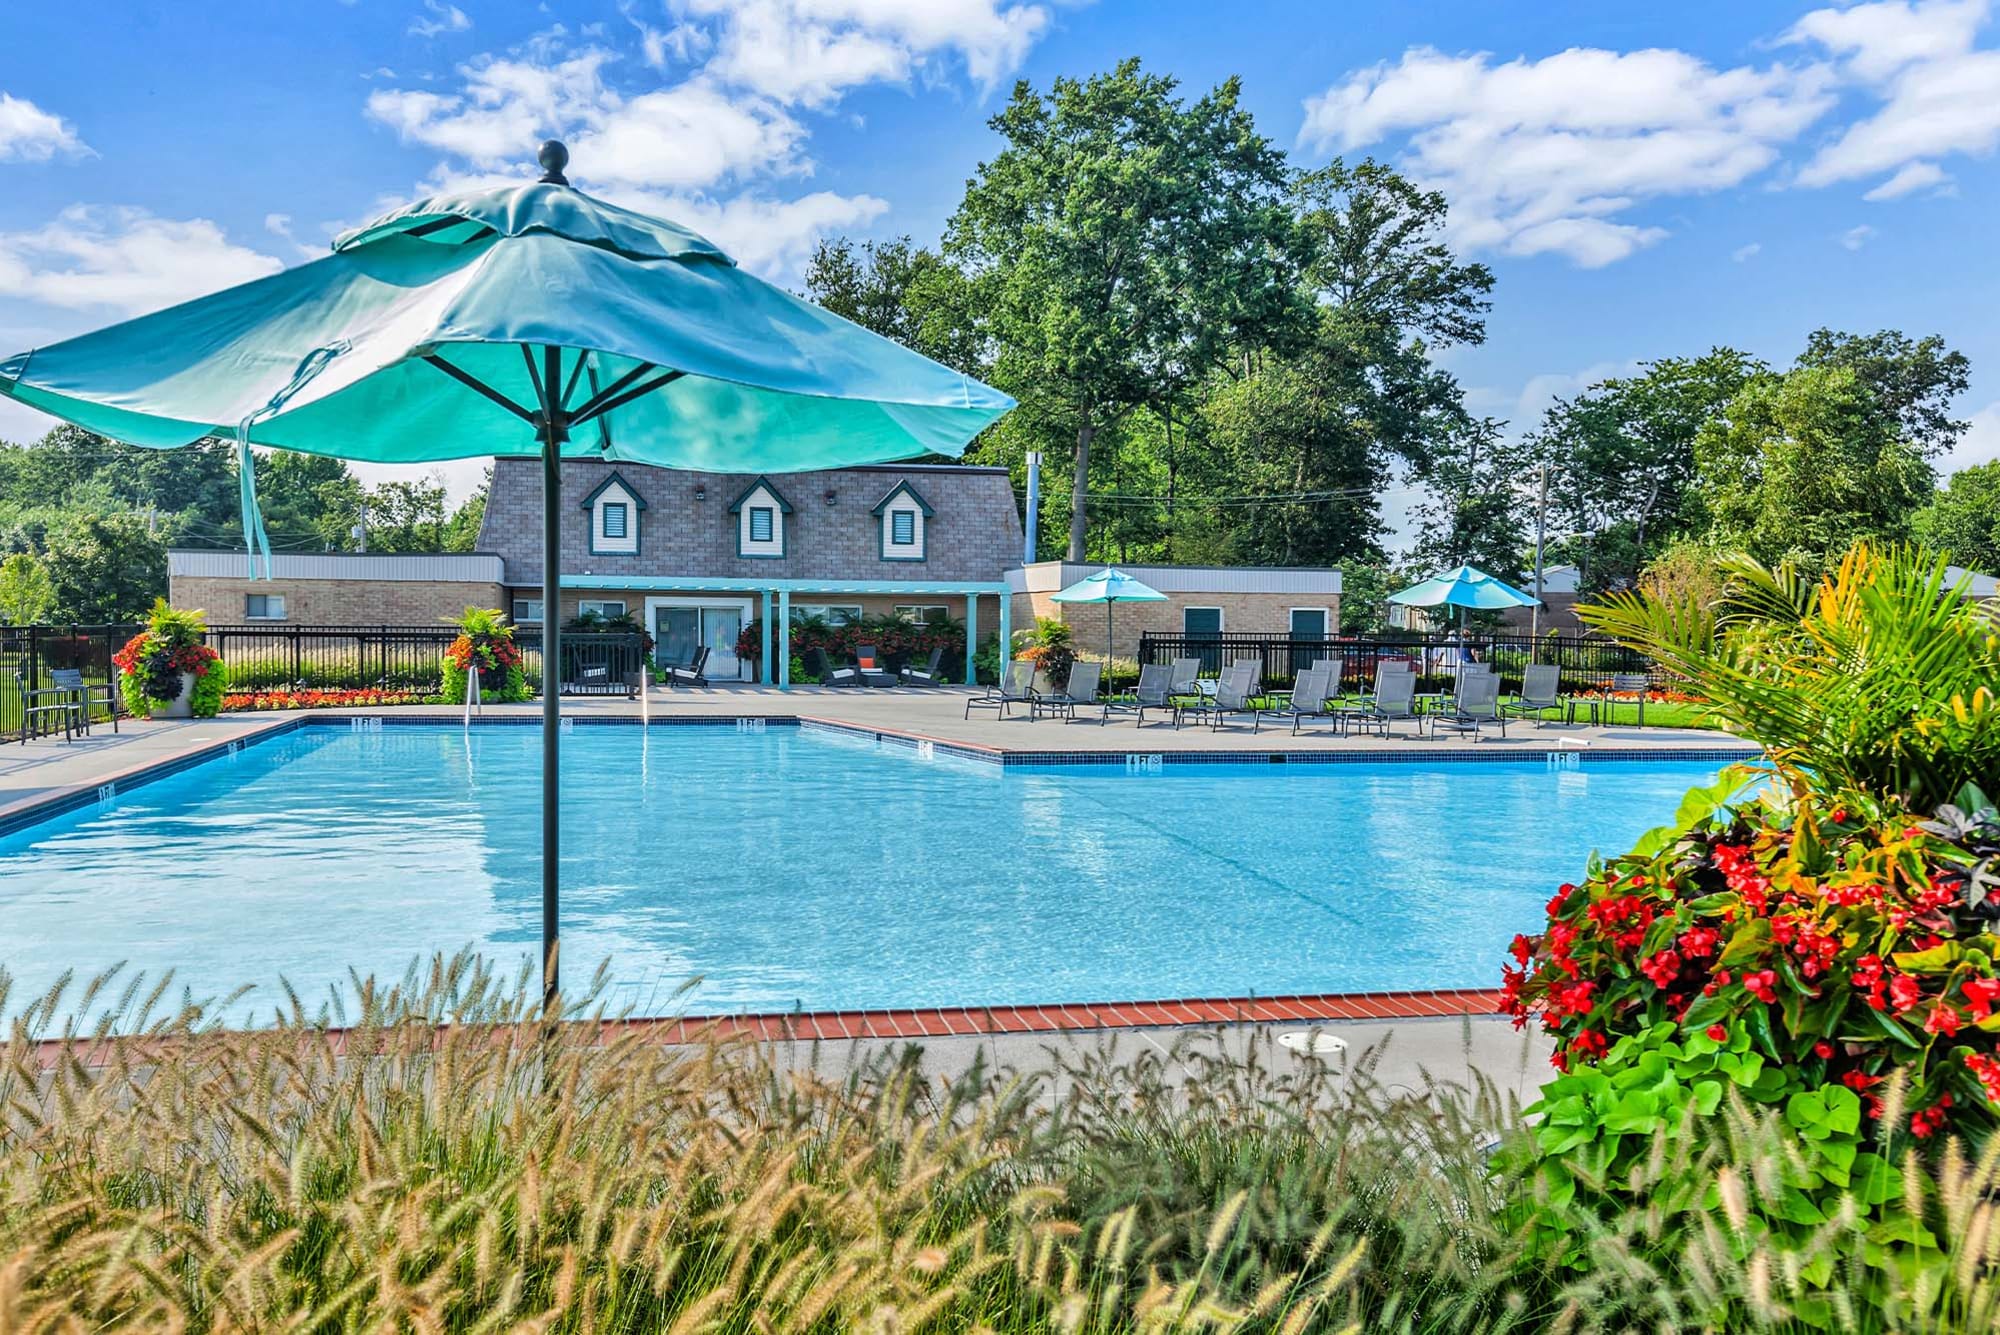 Pool at The Commons, Bensalem, Pennsylvania